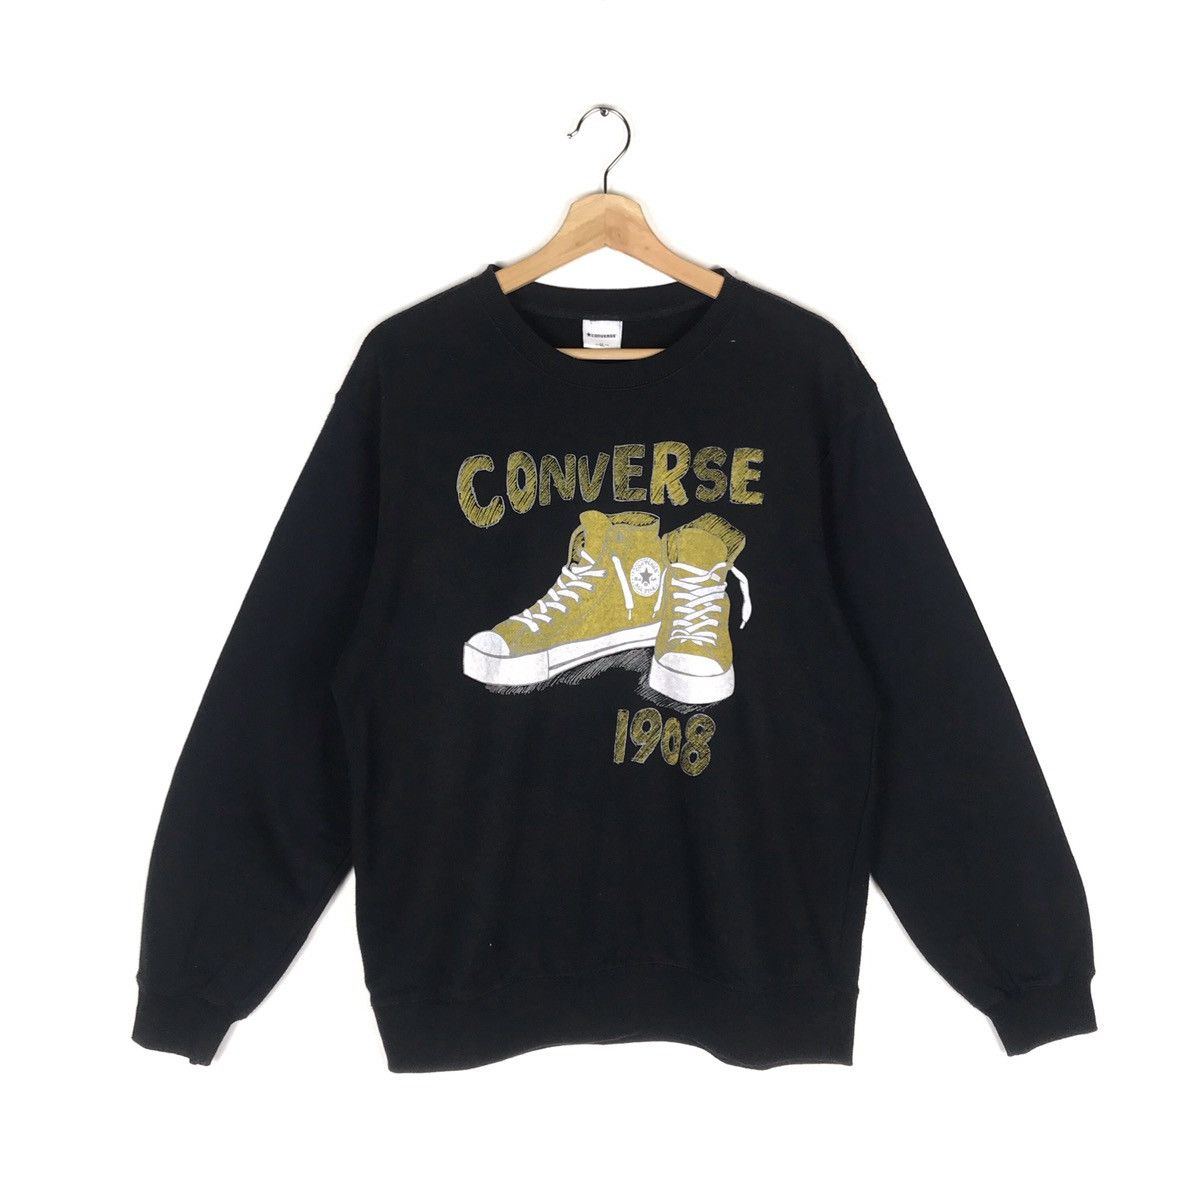 converse sweatshirt - 1